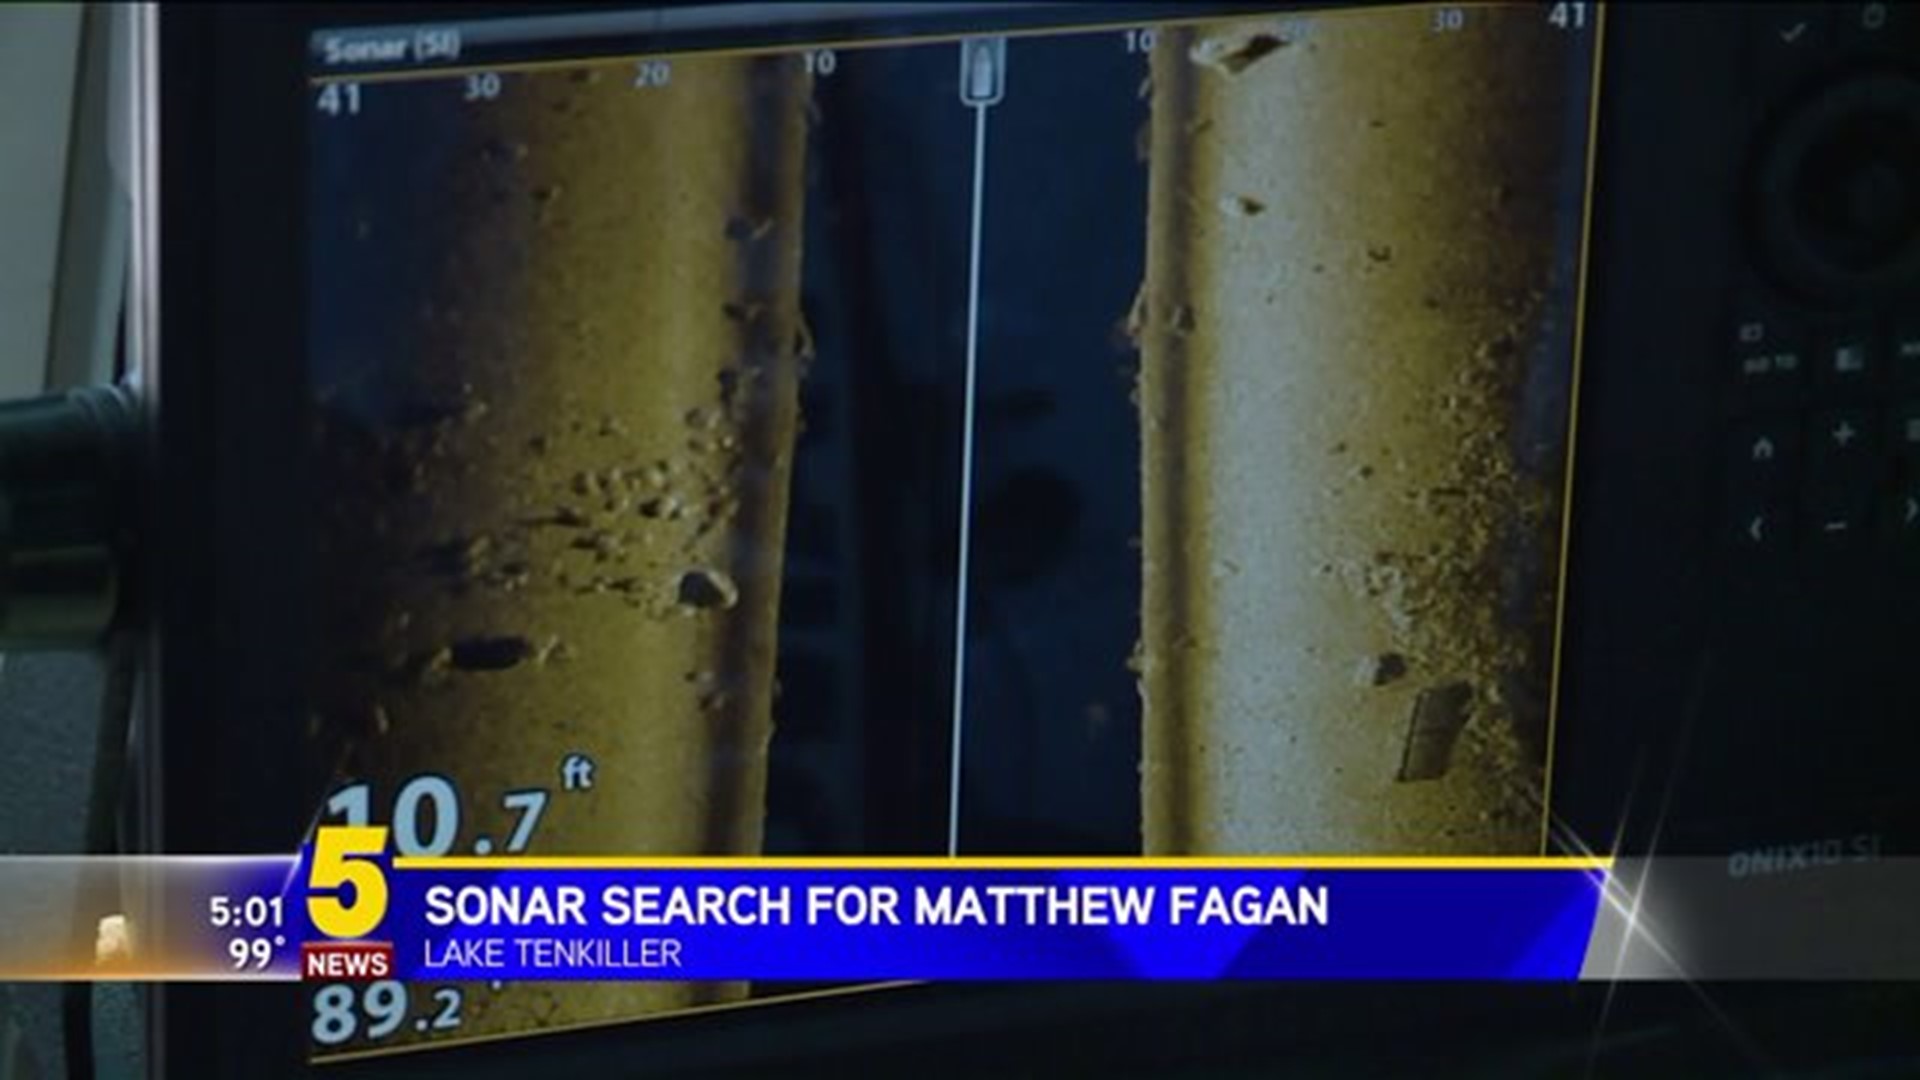 Water Sonar Search For Matthew Fagan